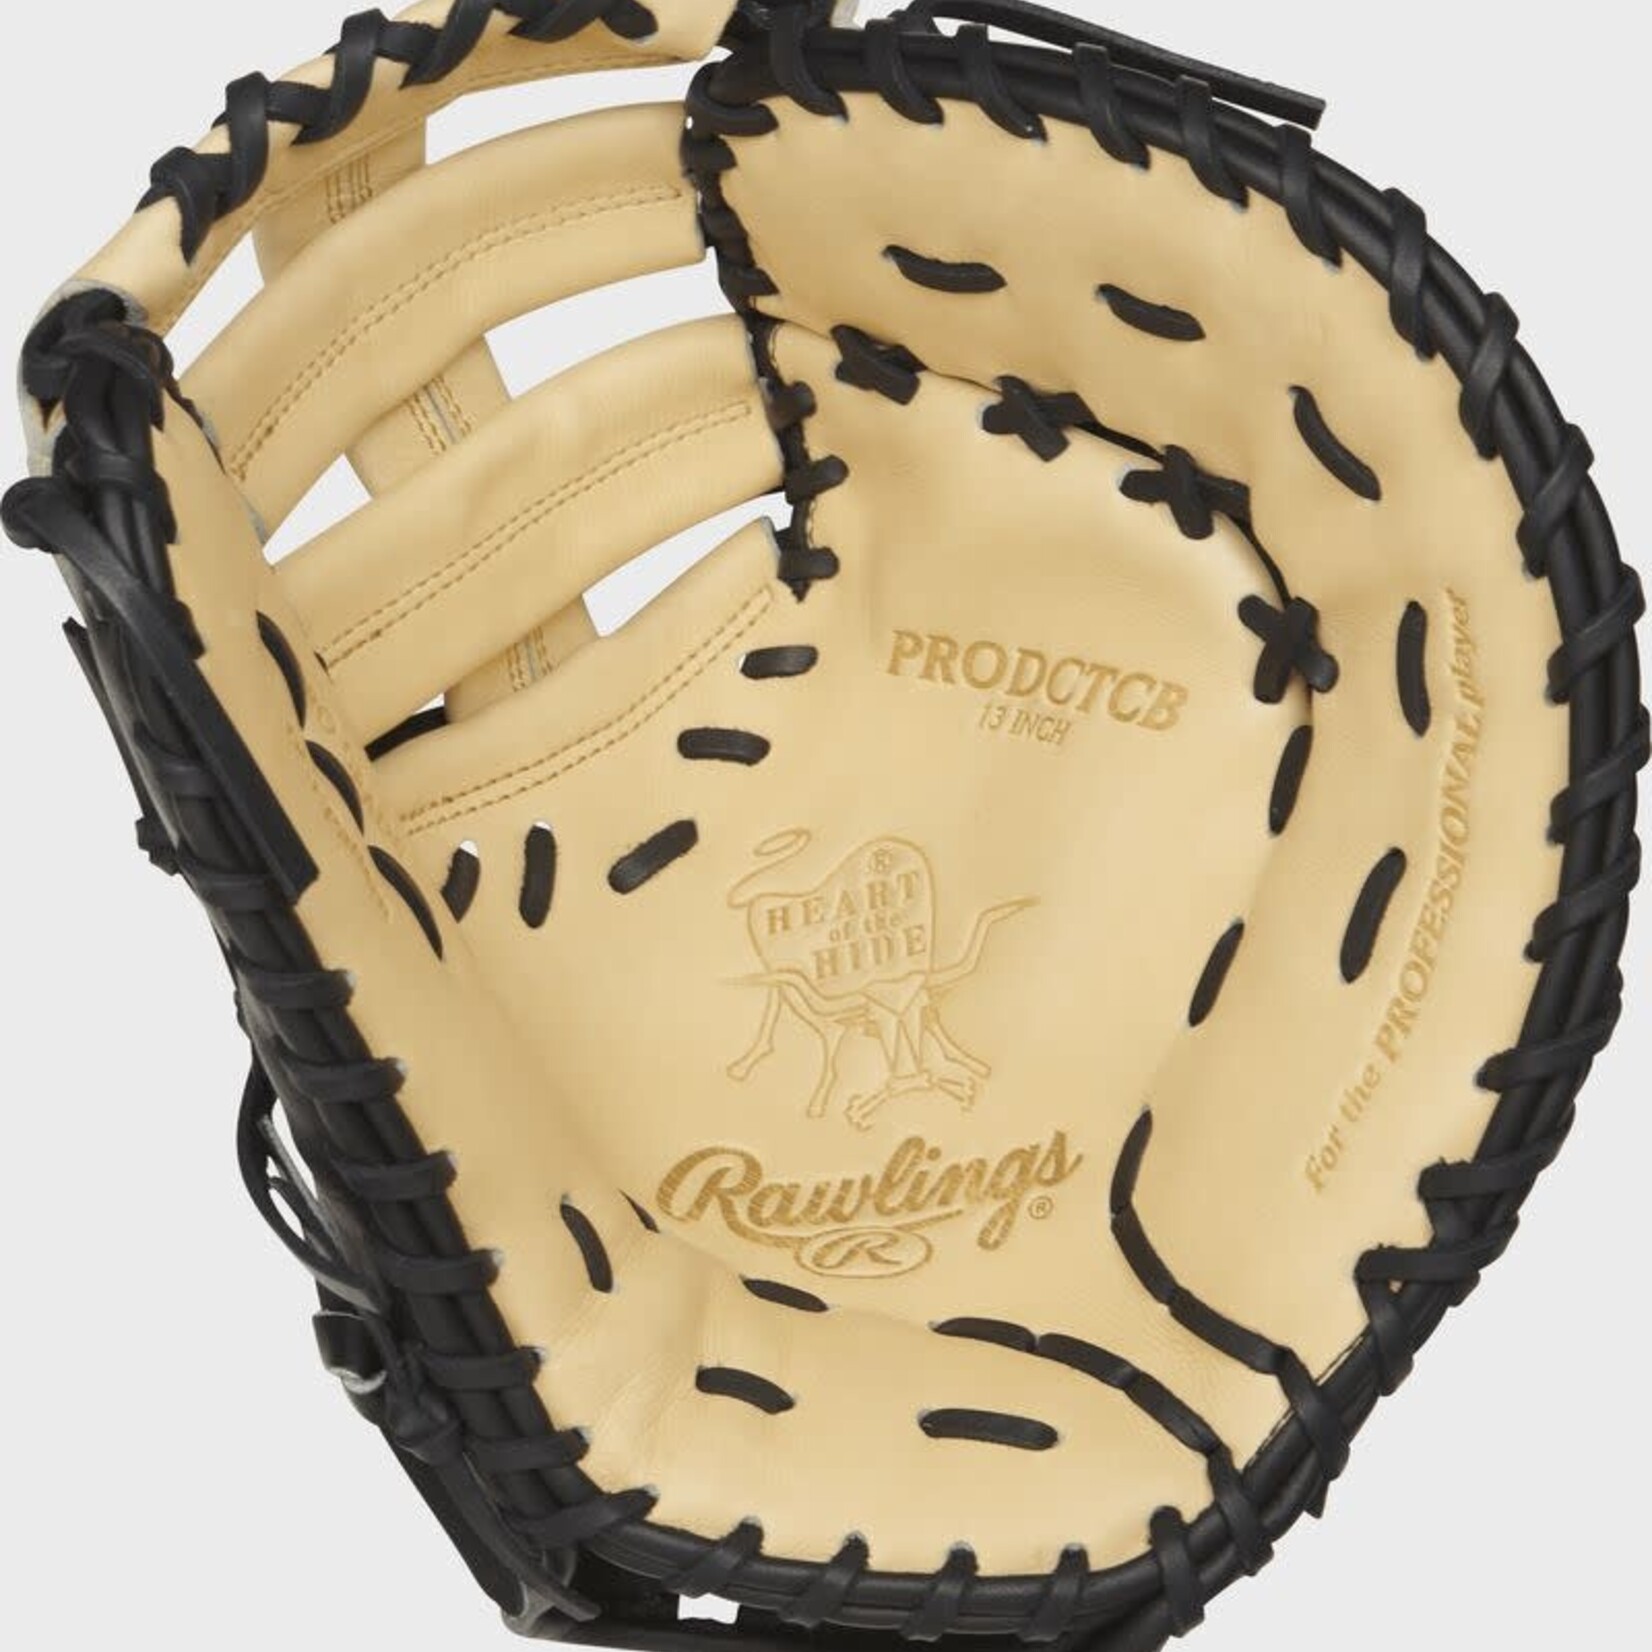 Rawlings Rawlings Baseball Glove, Heart of the Hide PRODCTCB, 13”, Reg, First Base Mitt